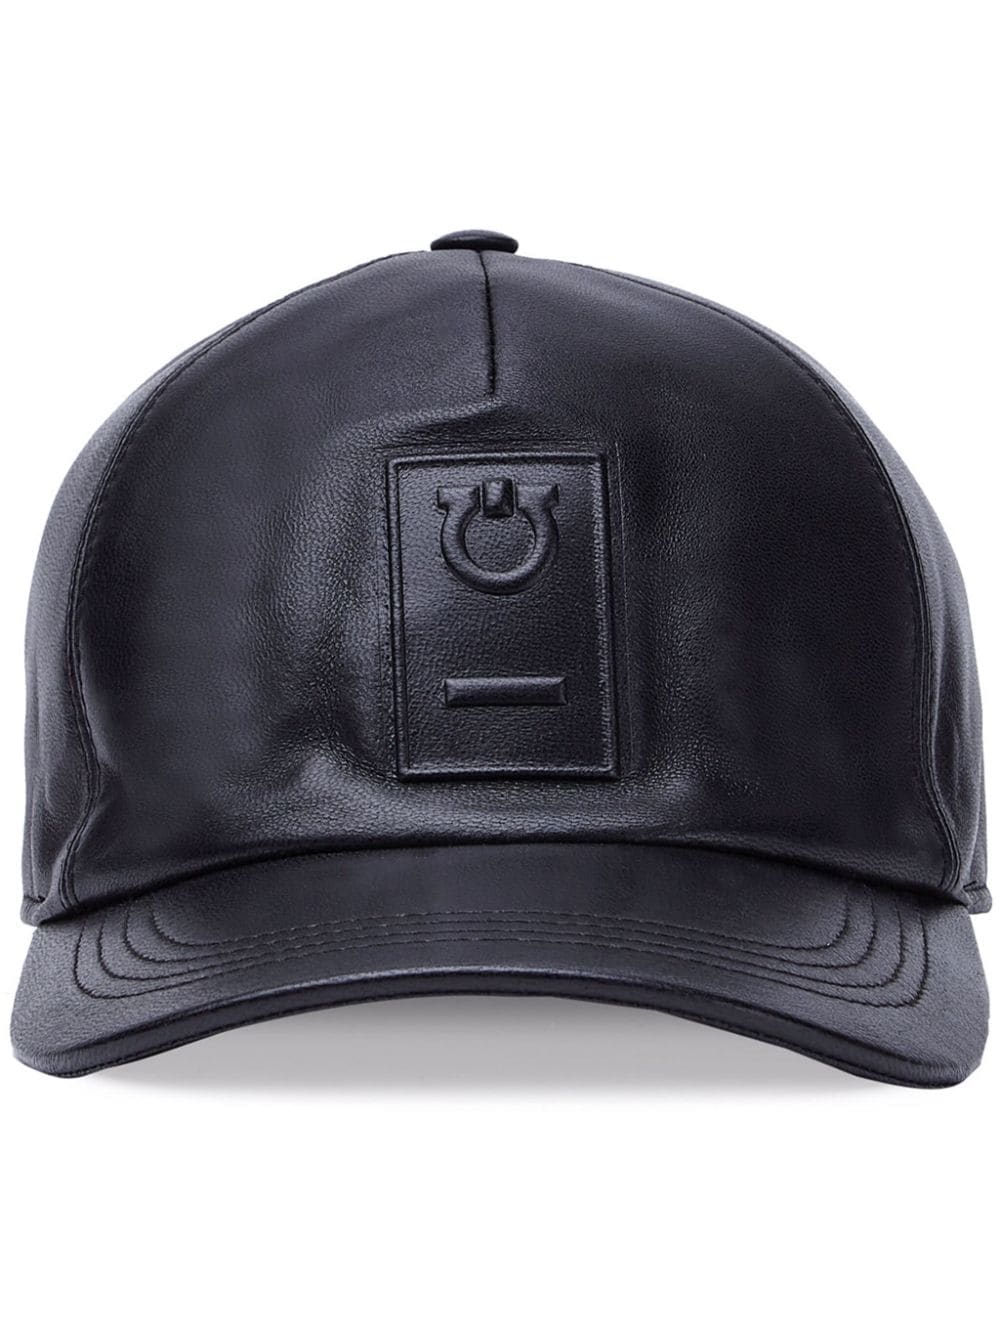 Ferragamo leather baseball cap - Black von Ferragamo